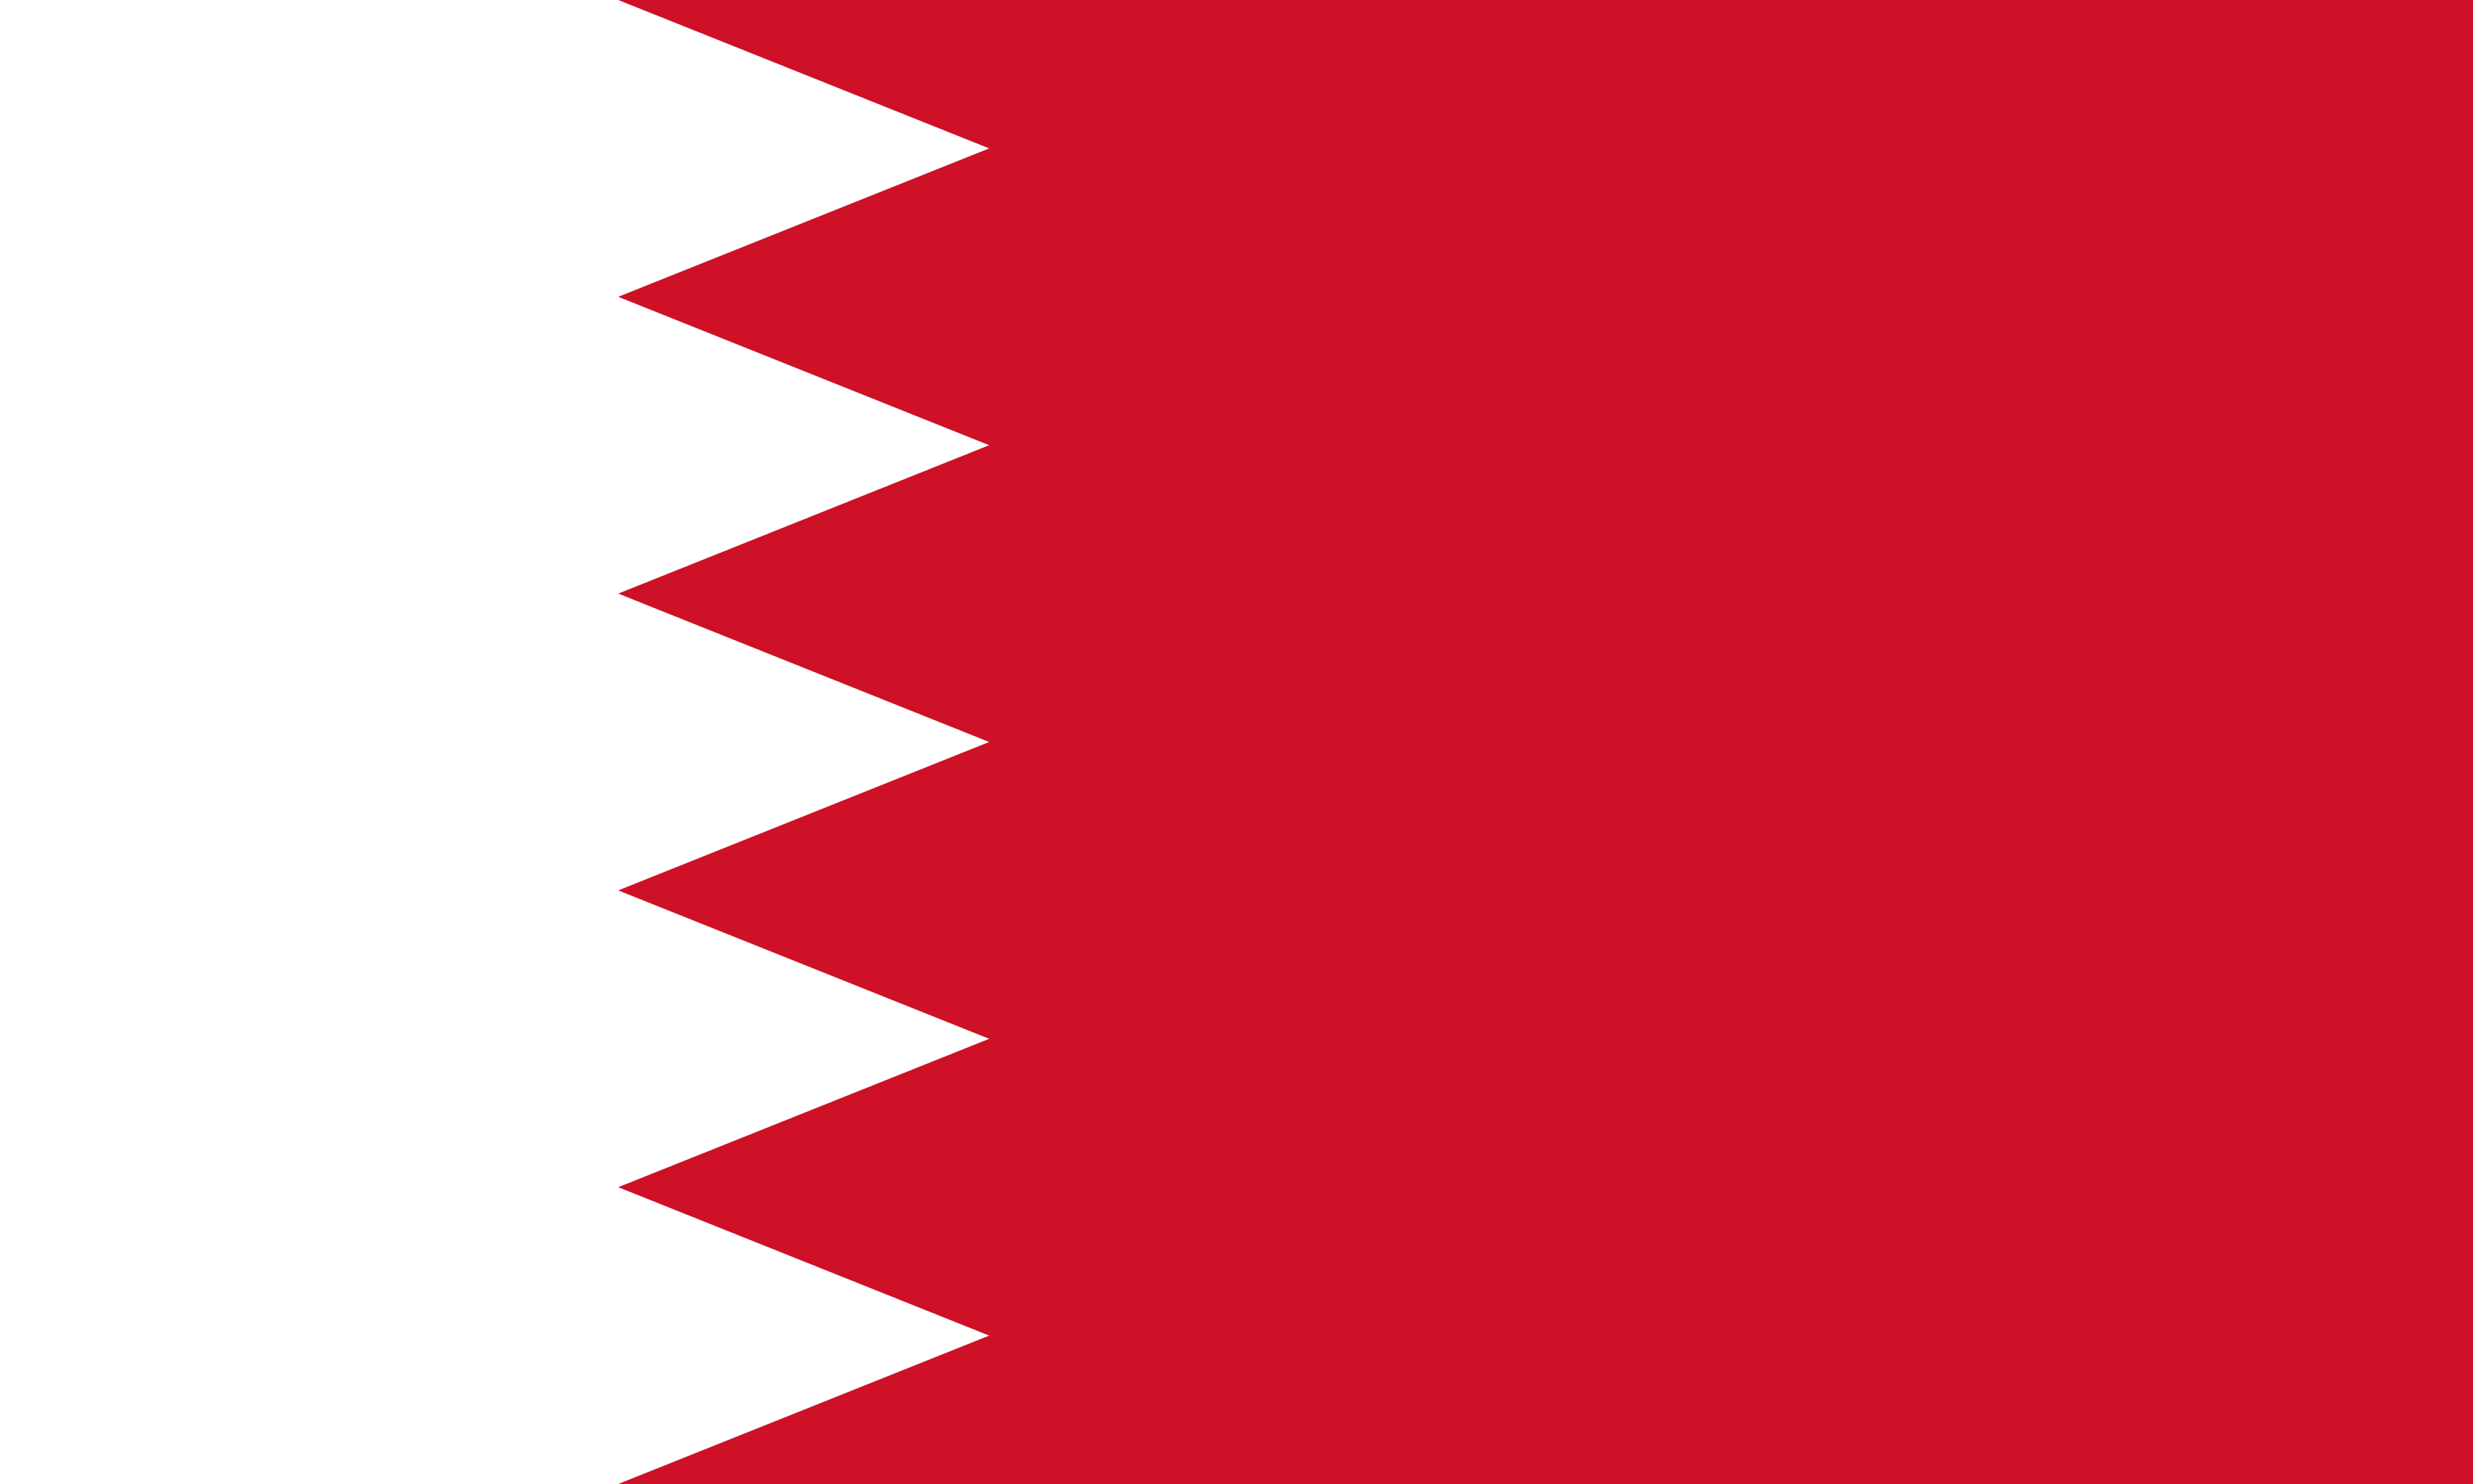 Free Bahrain Flag Documents: PDF, DOC, DOCX, HTML & More!